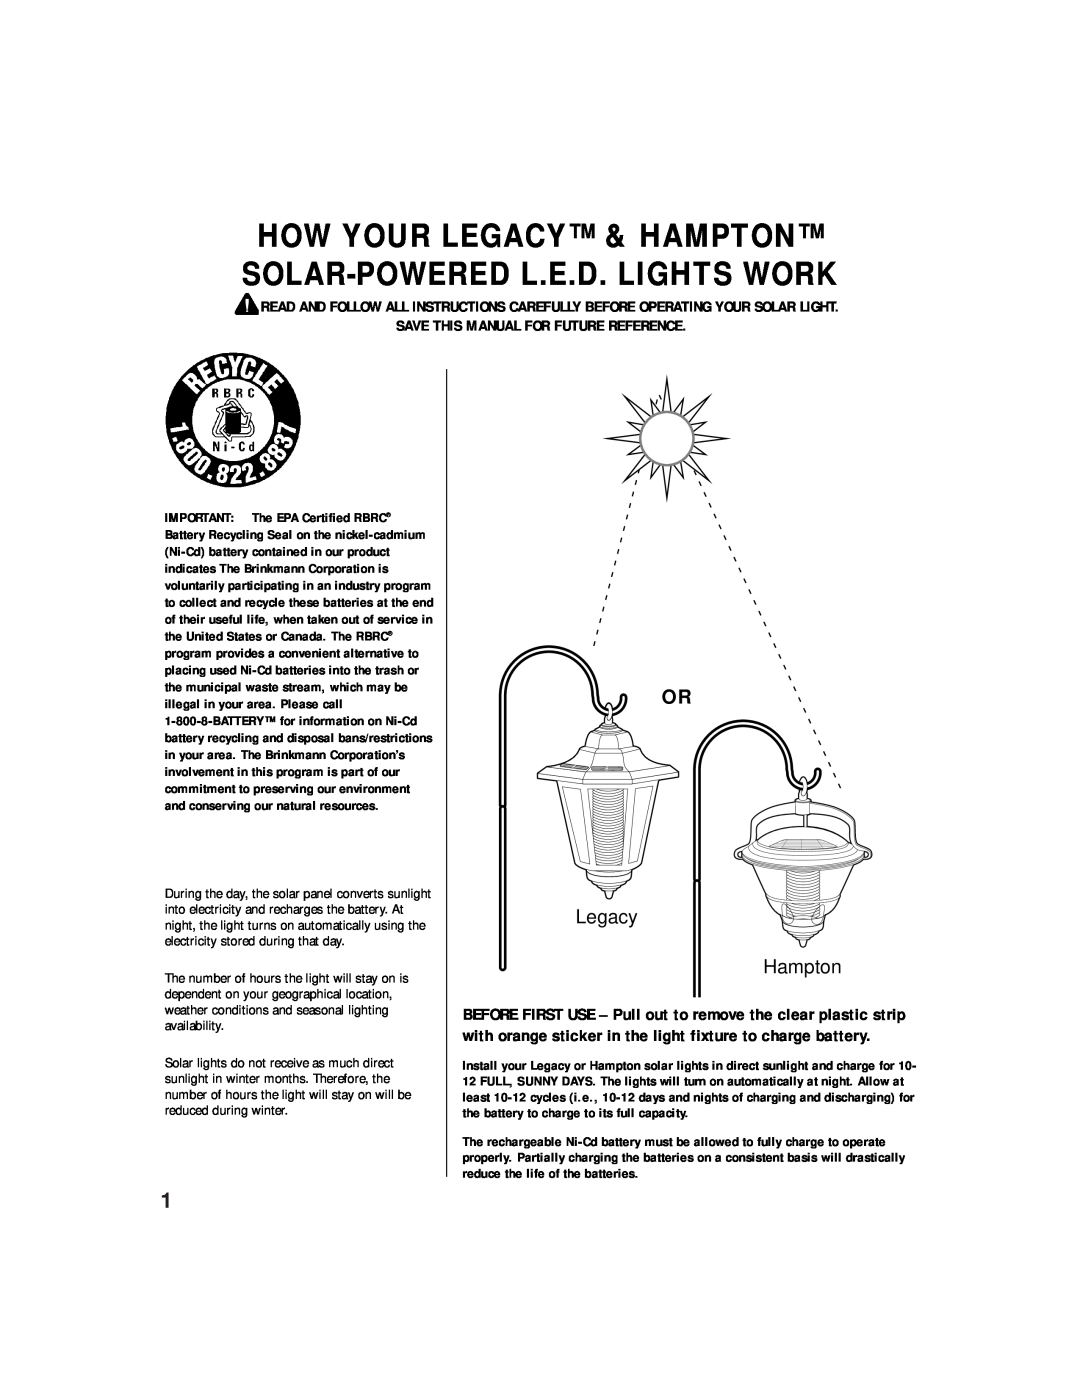 Brinkmann Solar Powered L.E.D. Garden Accent Lights owner manual How Your Legacy & Hampton Solar-Powered L.E.D. Lights Work 